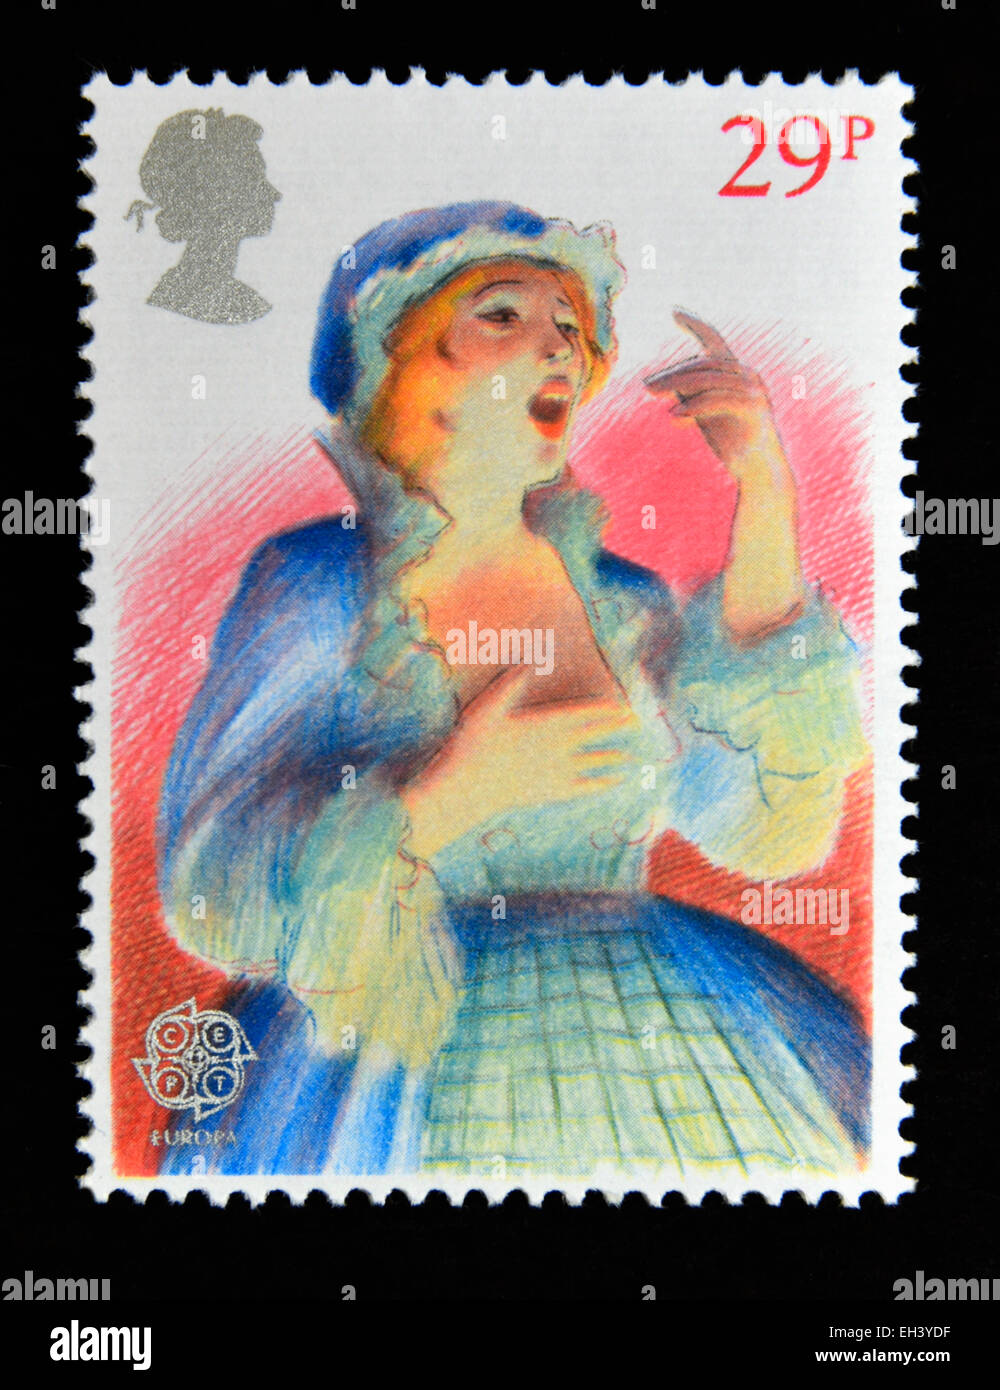 Postage stamp. Great Britain. Queen Elizabeth II. 1982. Europa. British Theatre. Opera Singer. 29p. Stock Photo